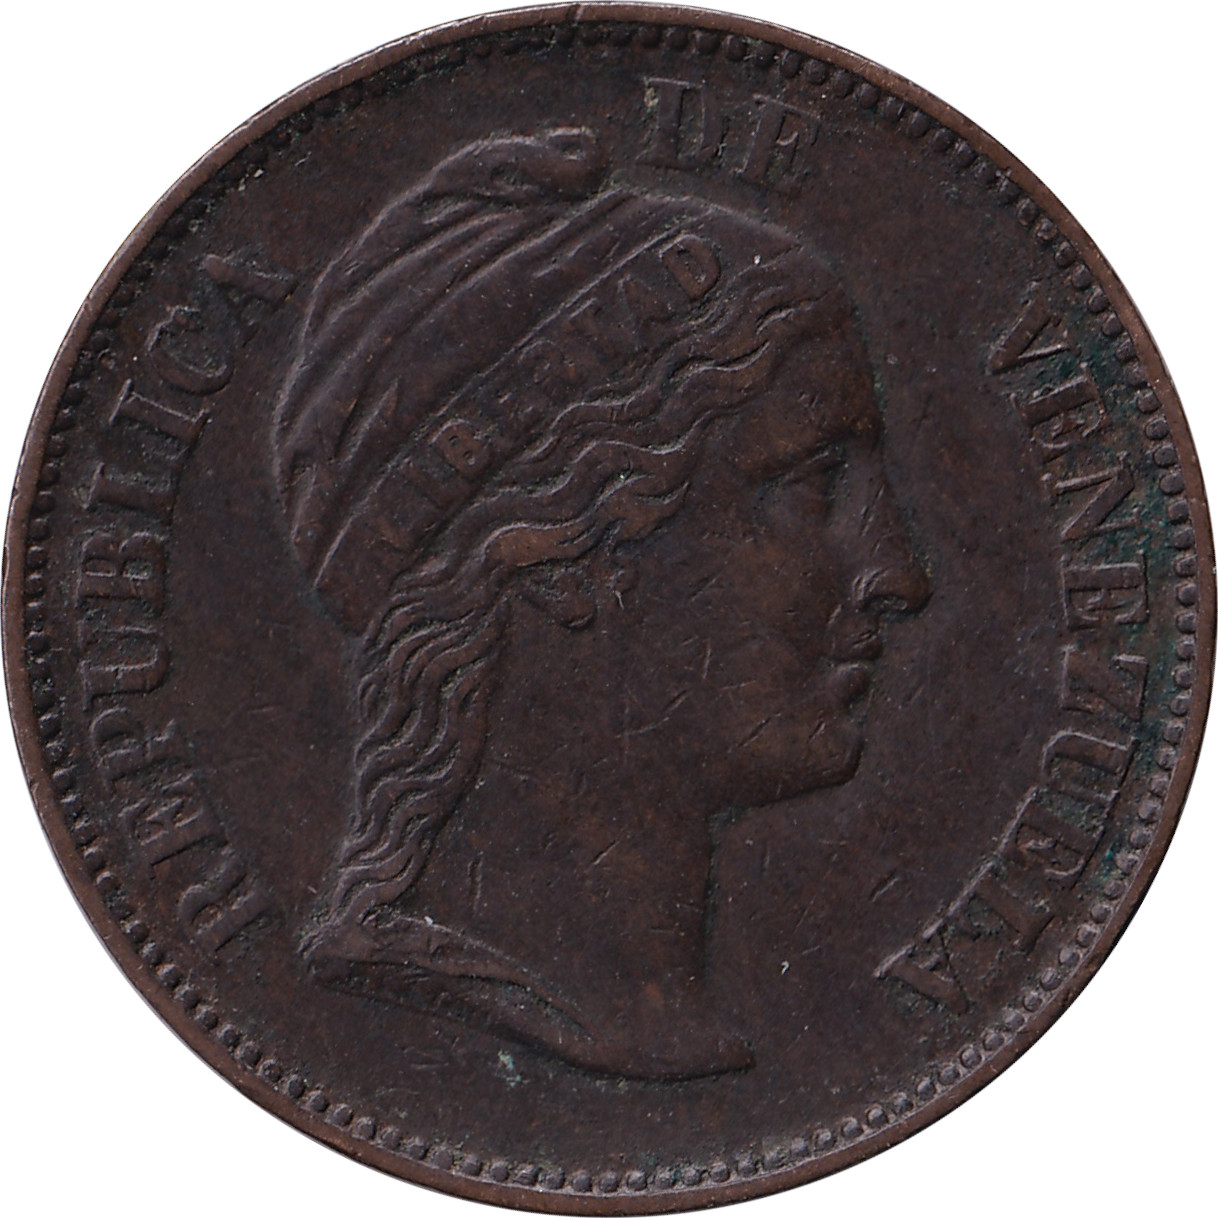 1 centavo - Liberty - Smallest (7.50 g)